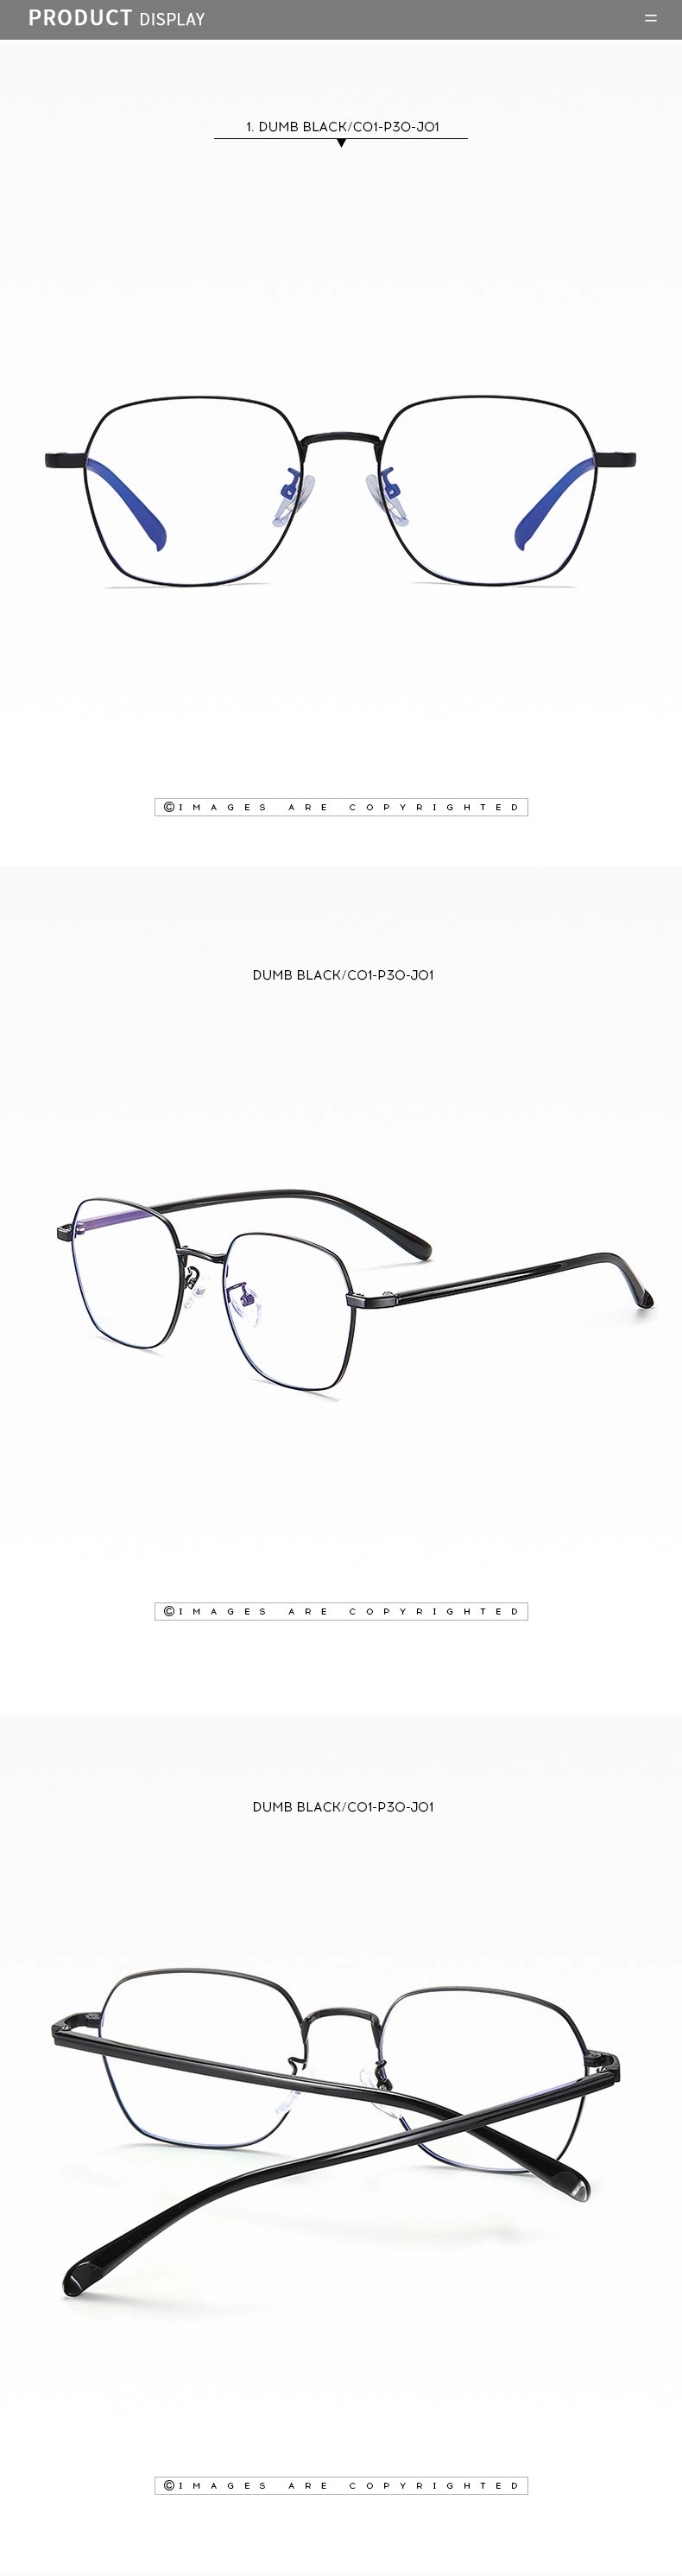 Anti Blue Light Eye Protection Eyeglasses Anti-Blue Rays Glasses